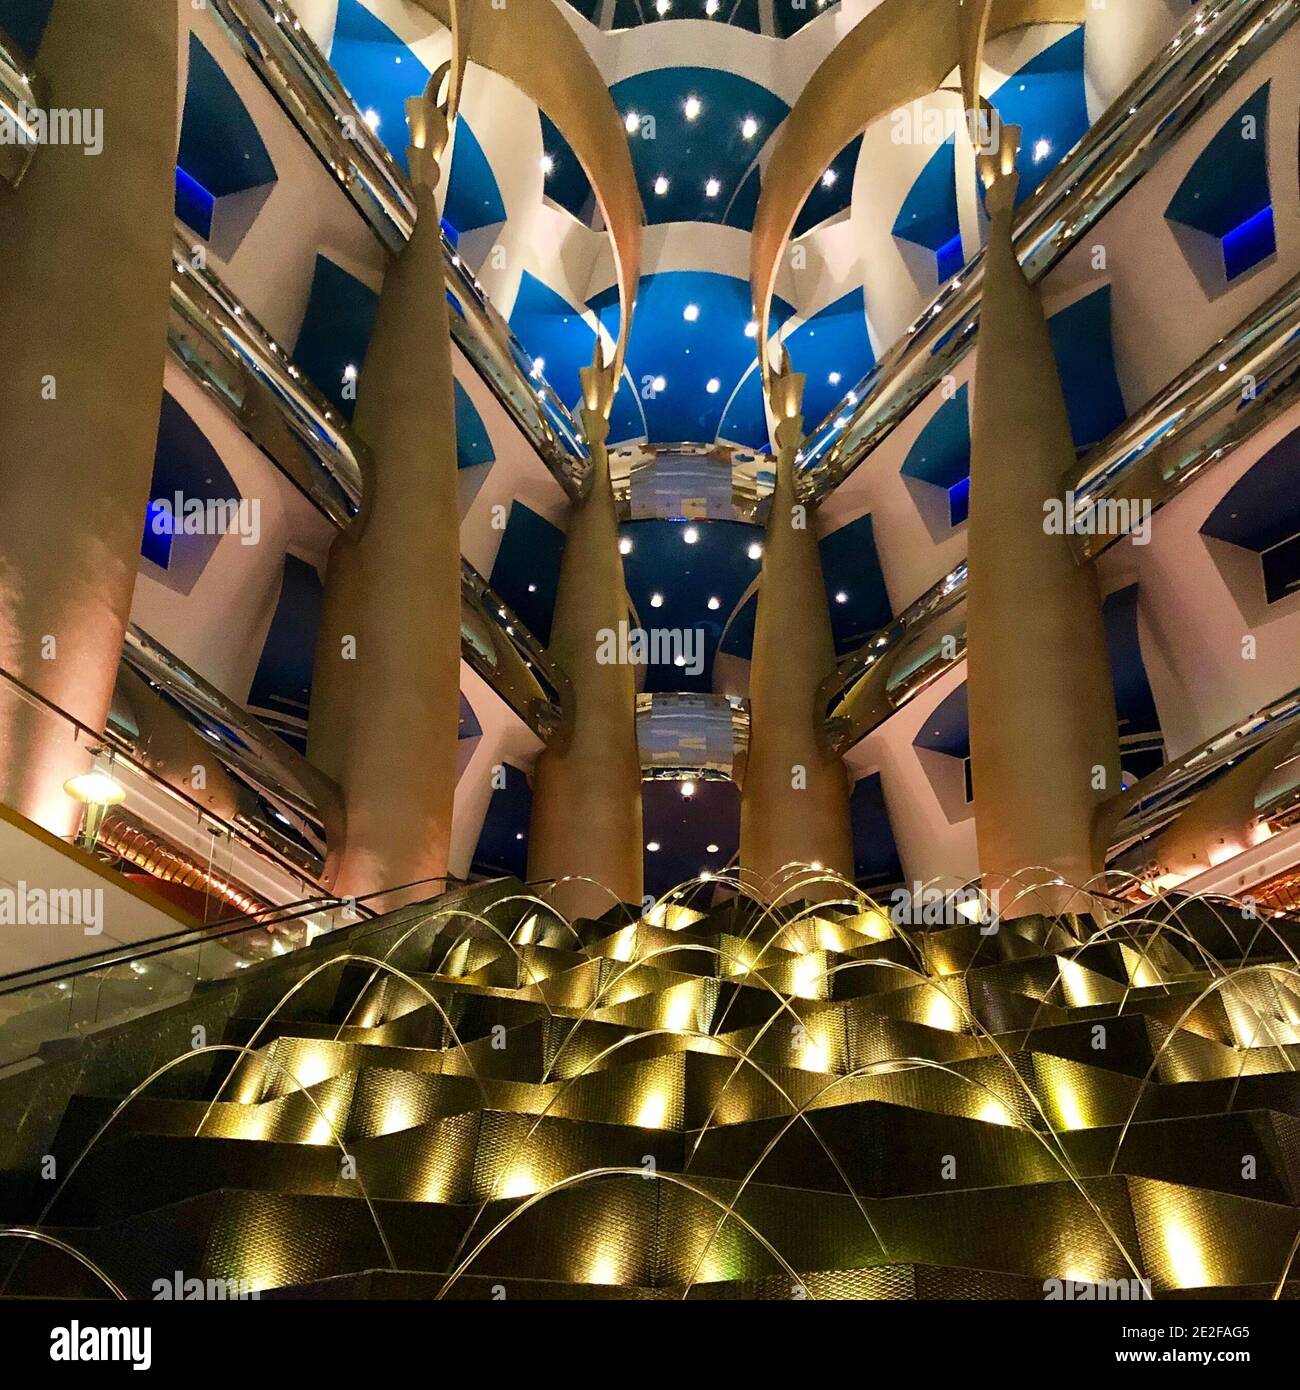 DUBAI, UNITED ARAB EMIRATES - May 03, 2019: View of the interior lobby of the Burj Al Arab Hotel in Dubai, United Arab Emirates. Stock Photo